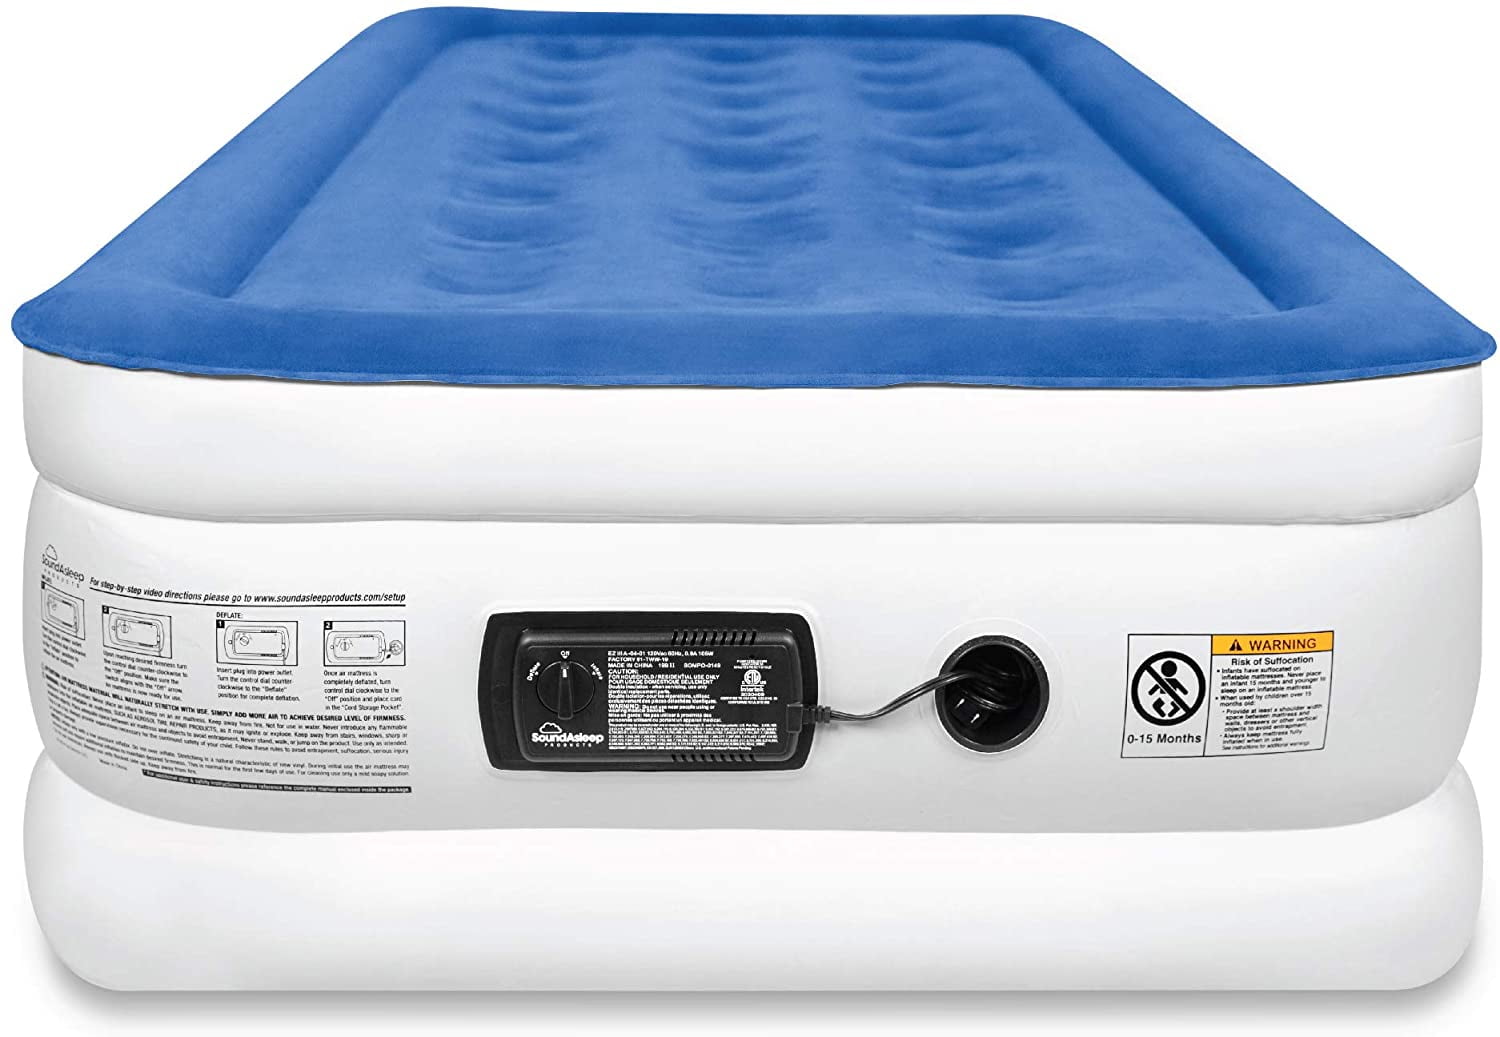 soundasleep dreams series air mattress with comfortcoil